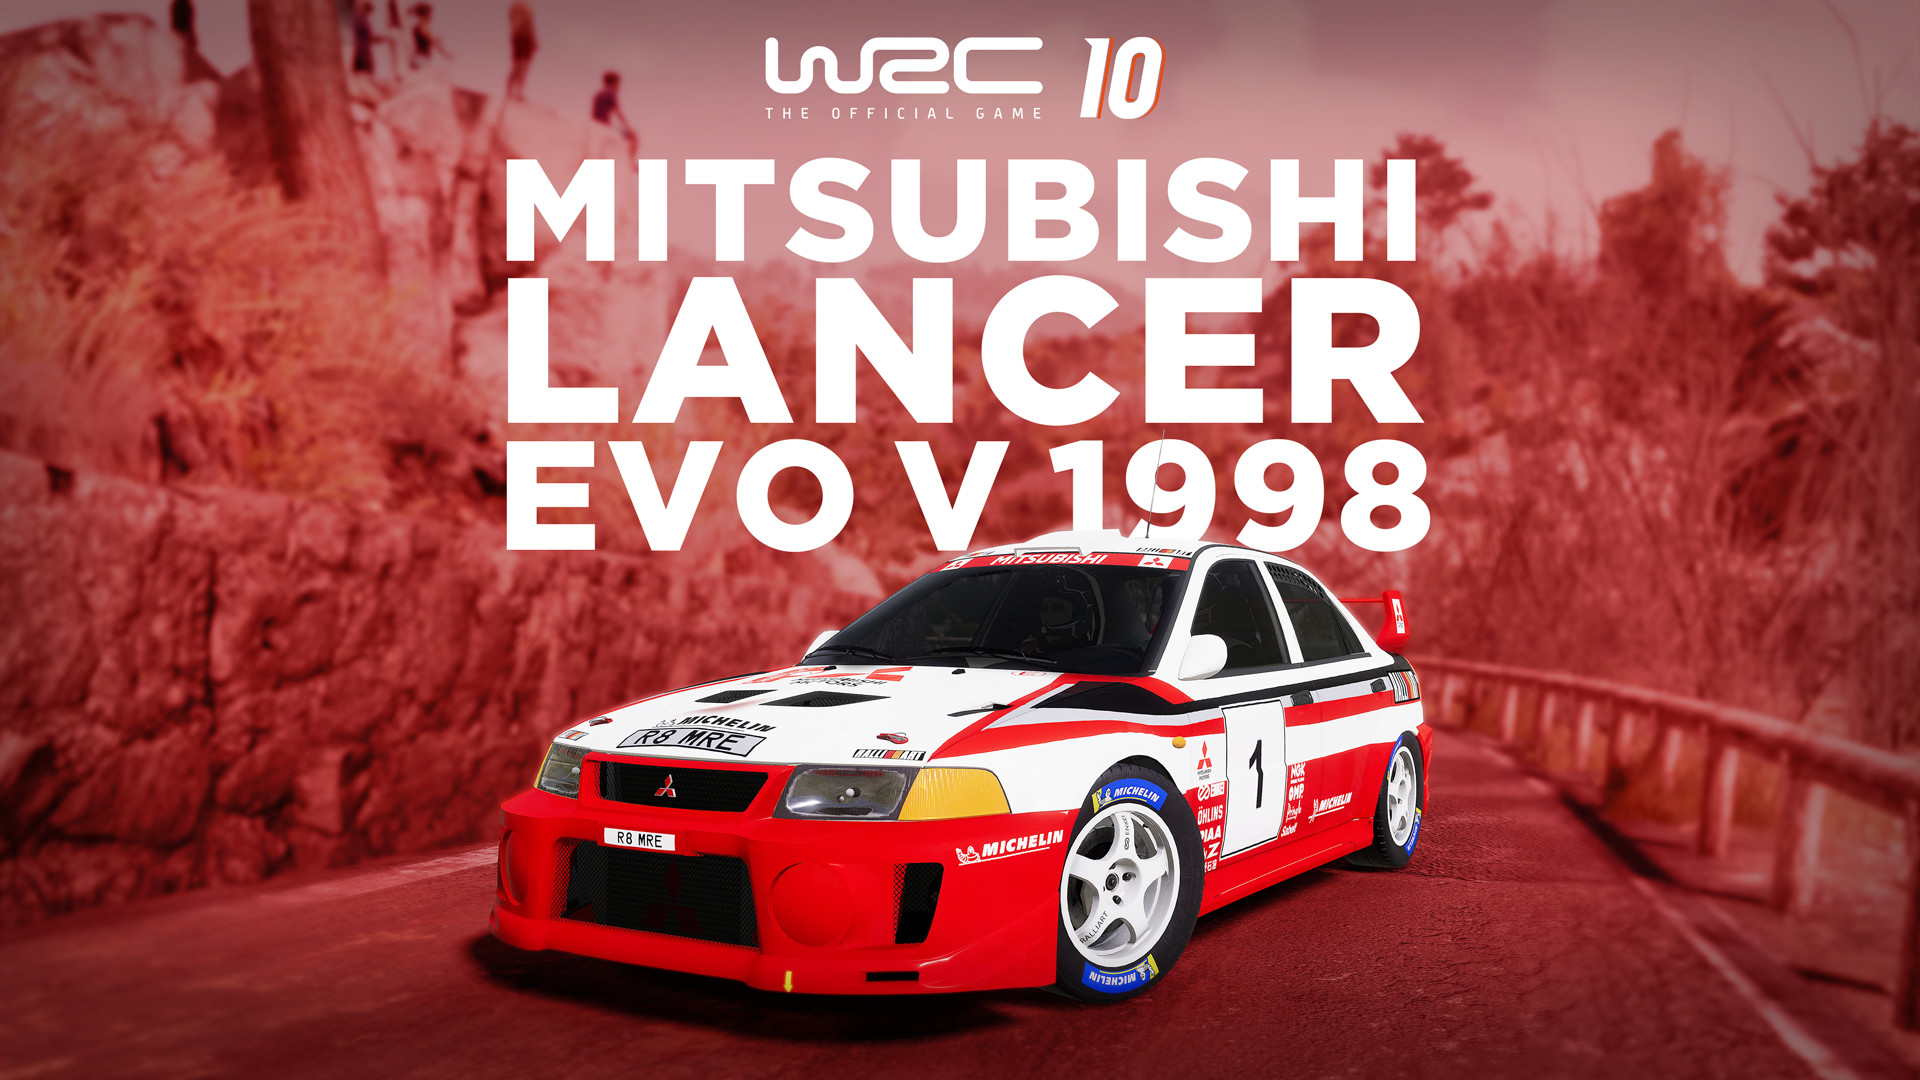 WRC 10 - Mitsubishi Lancer Evo V 1998 DLC Steam CD Key 2.69$